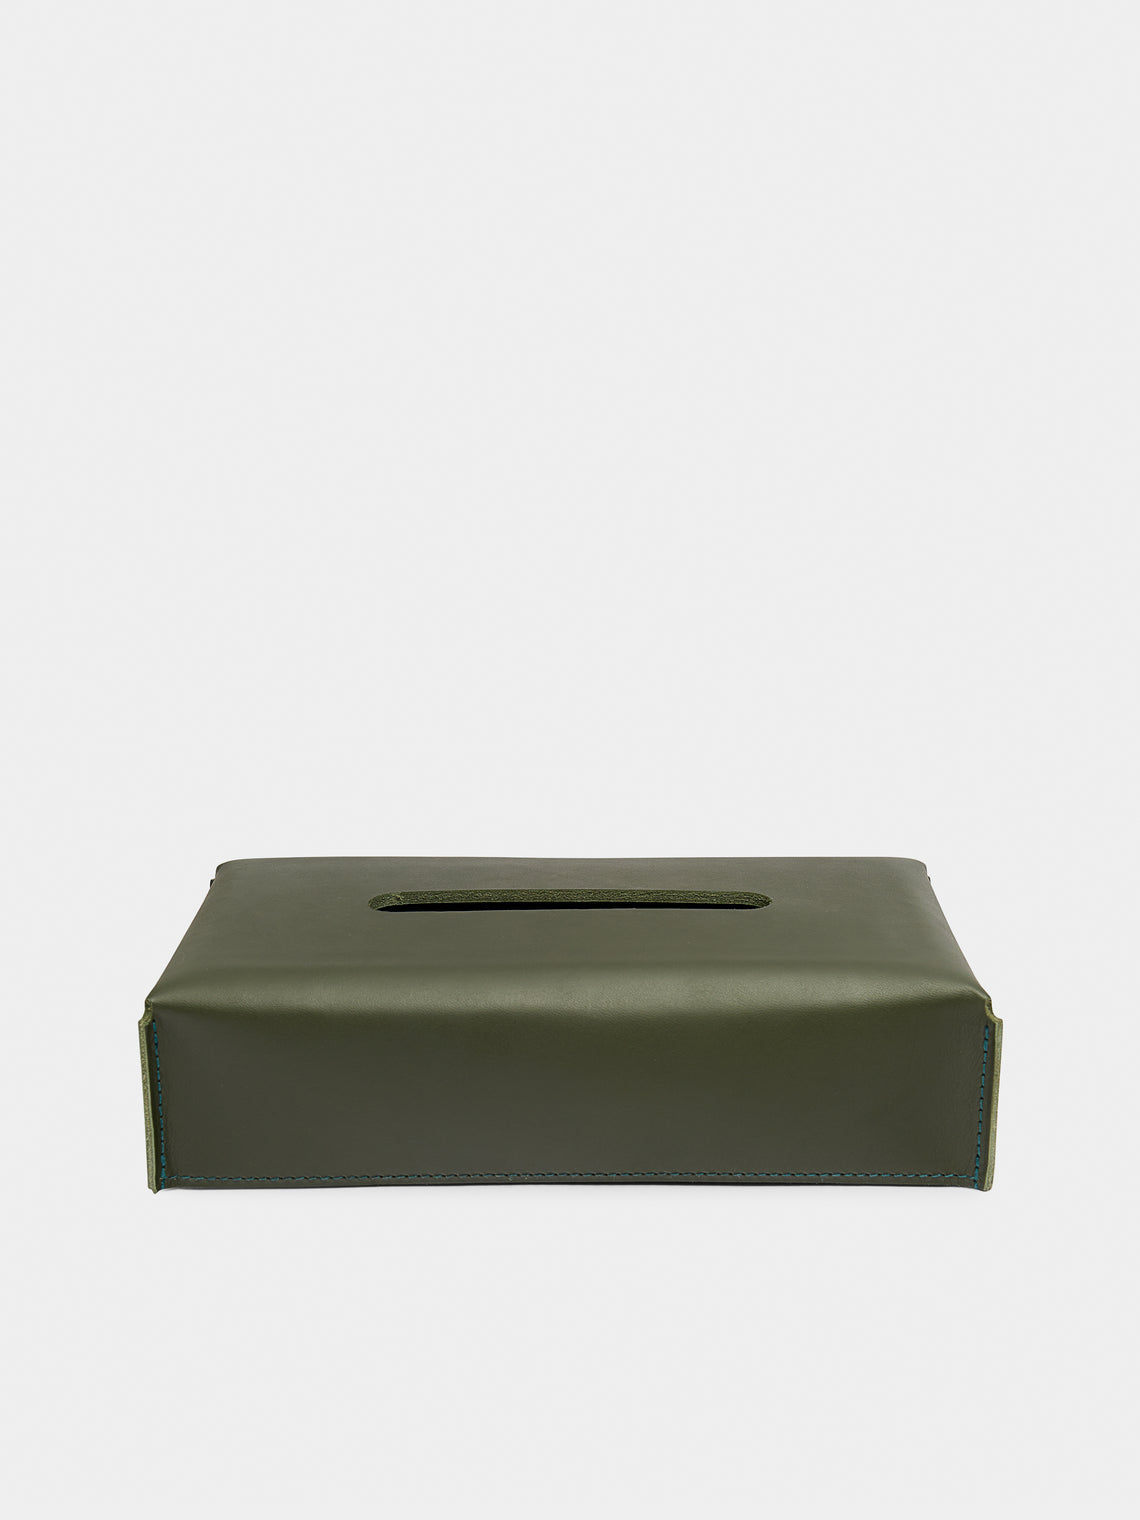 Rabitti 1969 - Amsterdam Leather Tissue Box - Green - ABASK - 